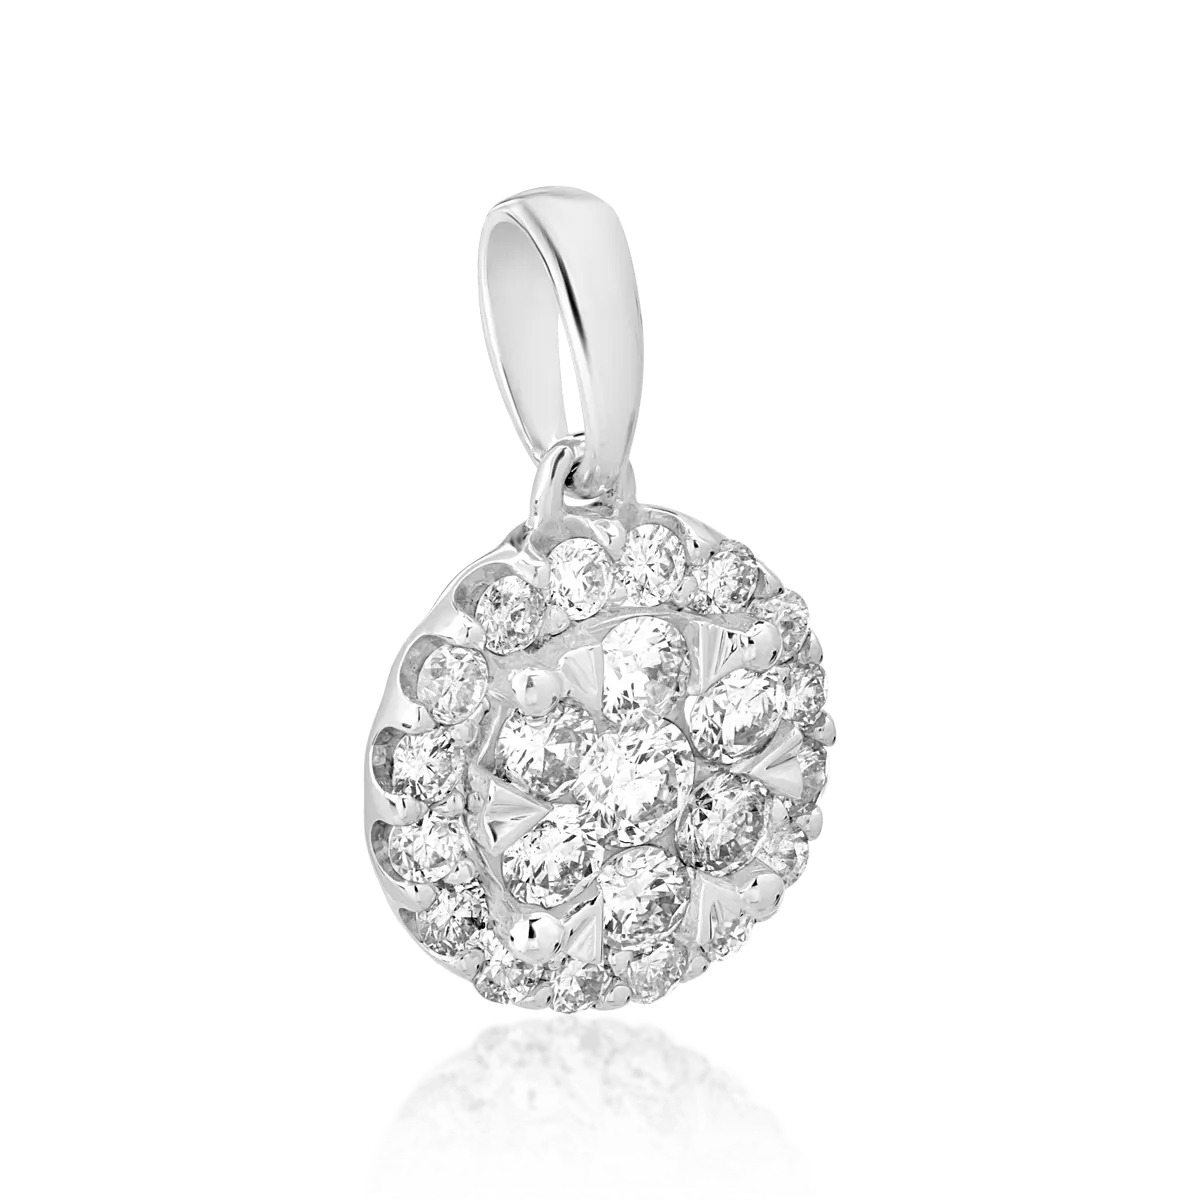 18K white gold pendant with diamonds of 0.5ct